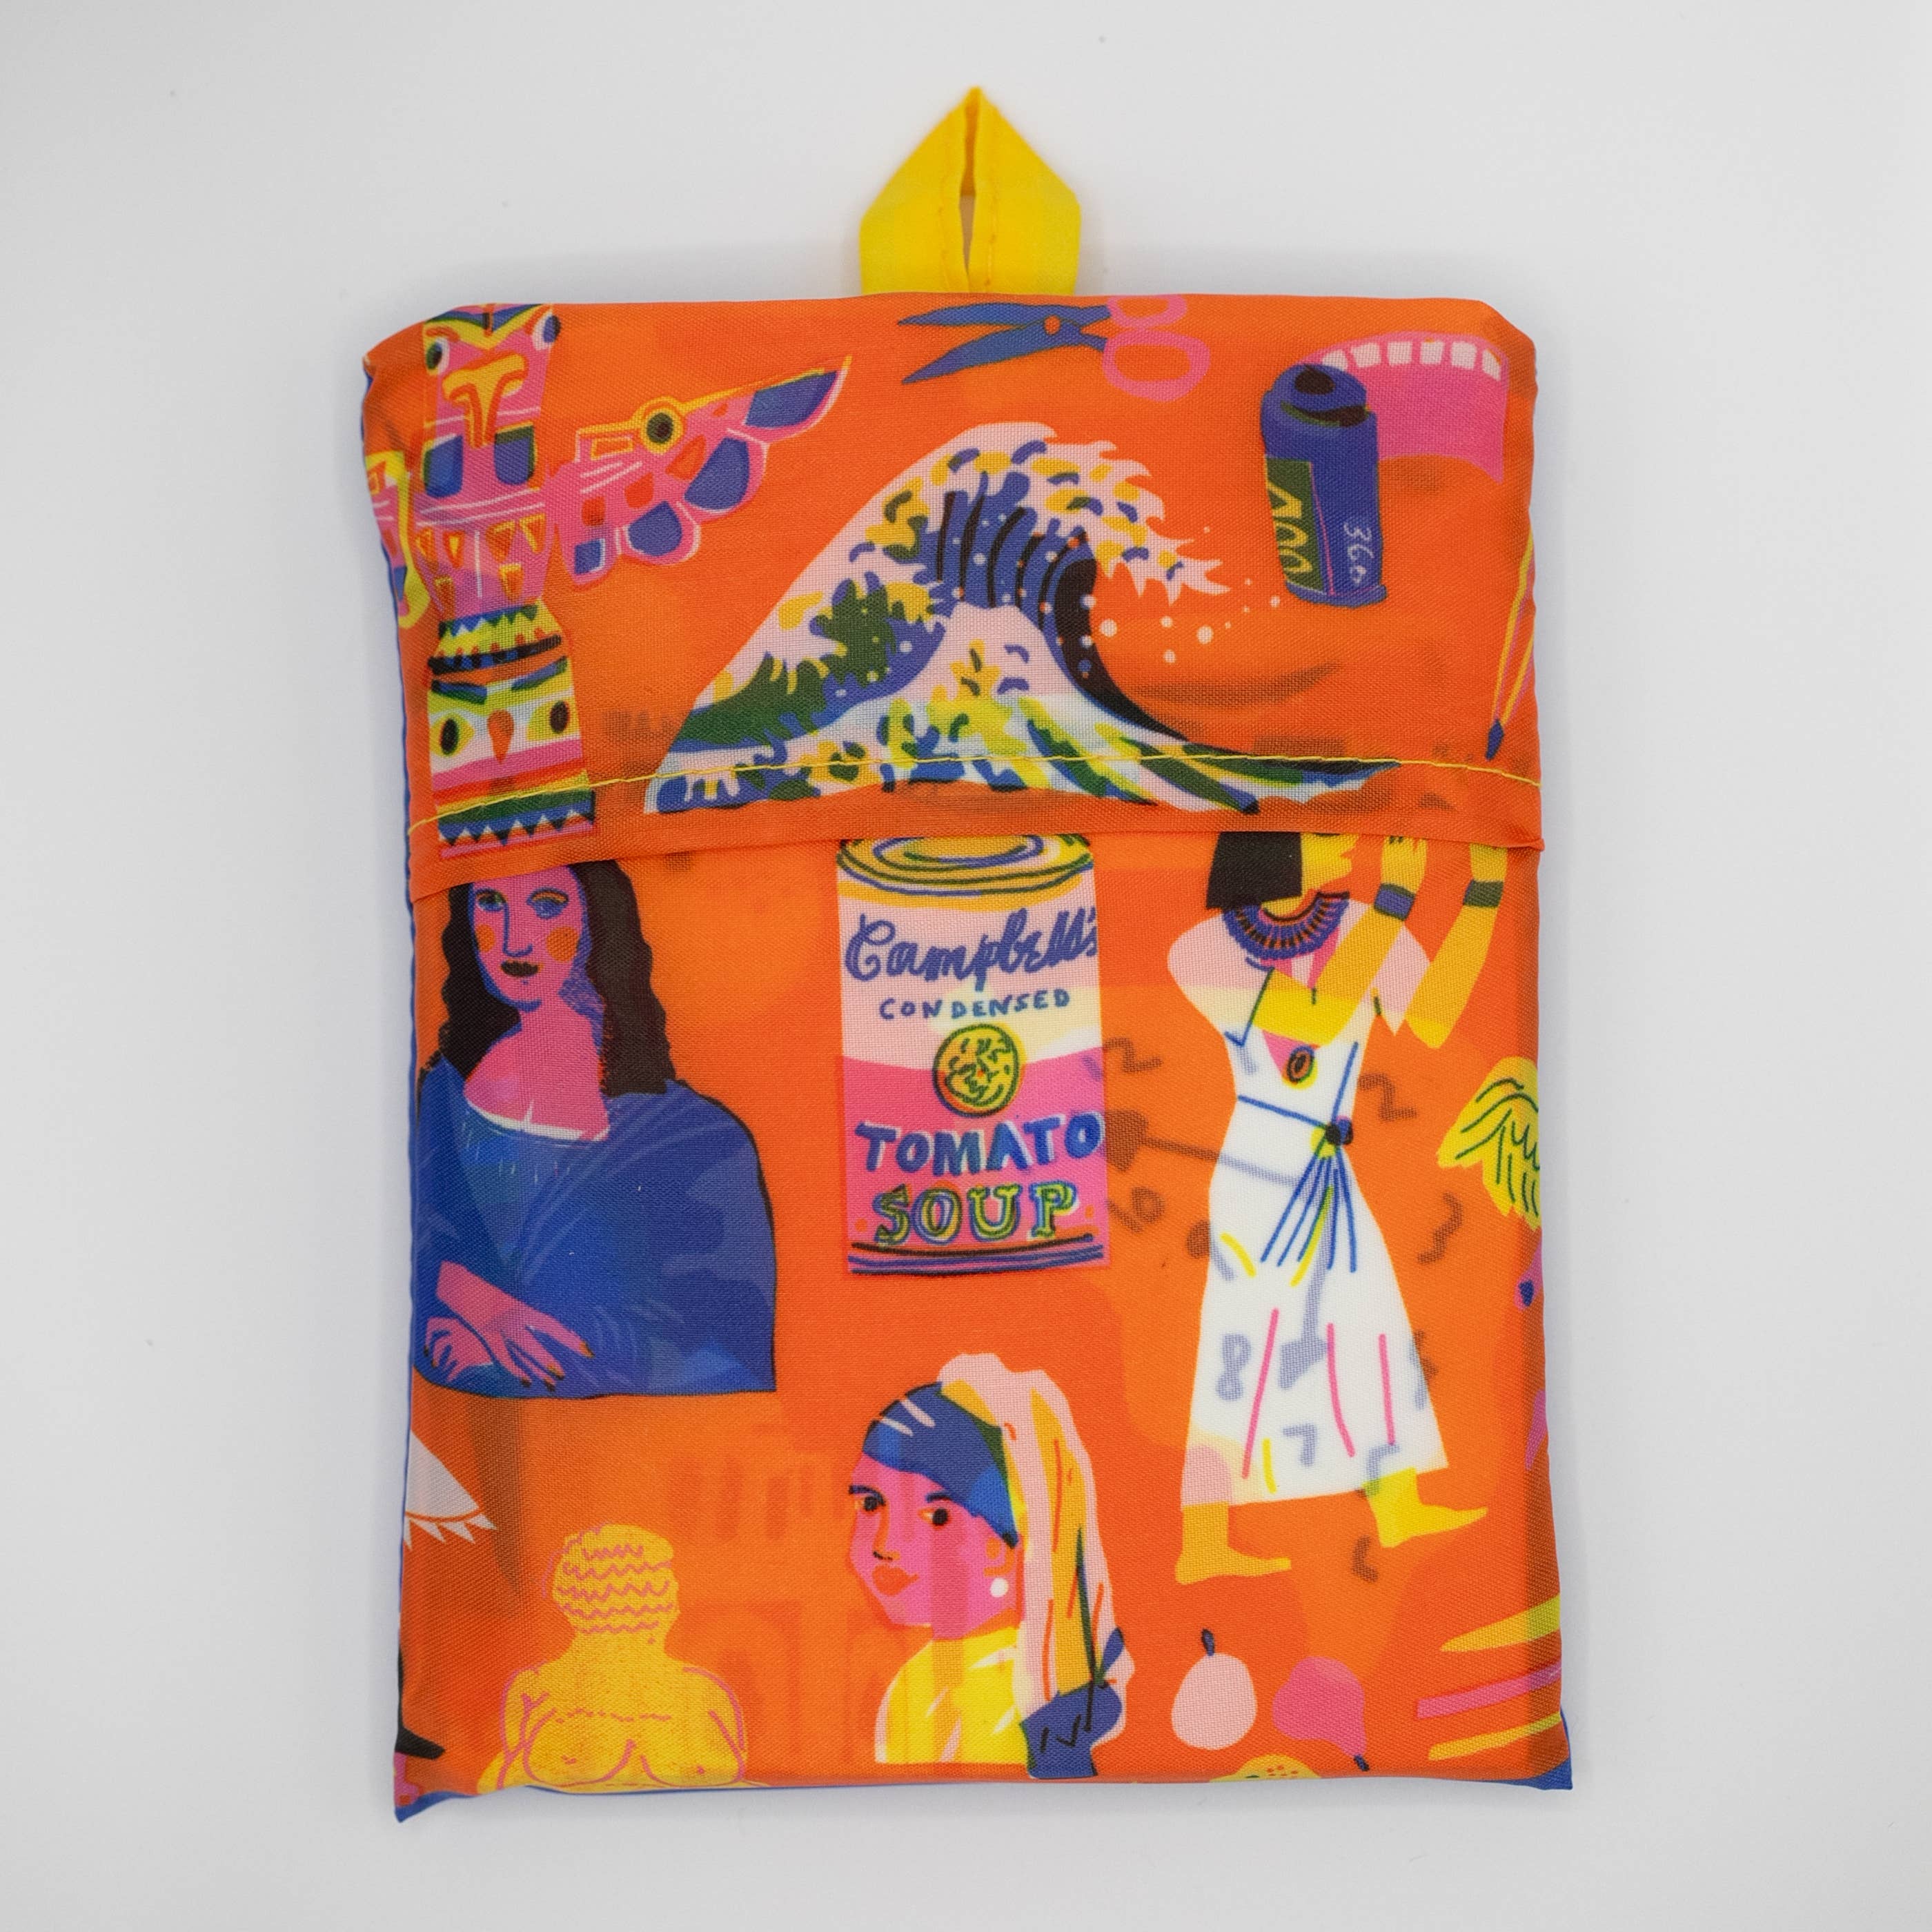 Art History Art Sack by Printed Peanut - Reusable Tote Bag